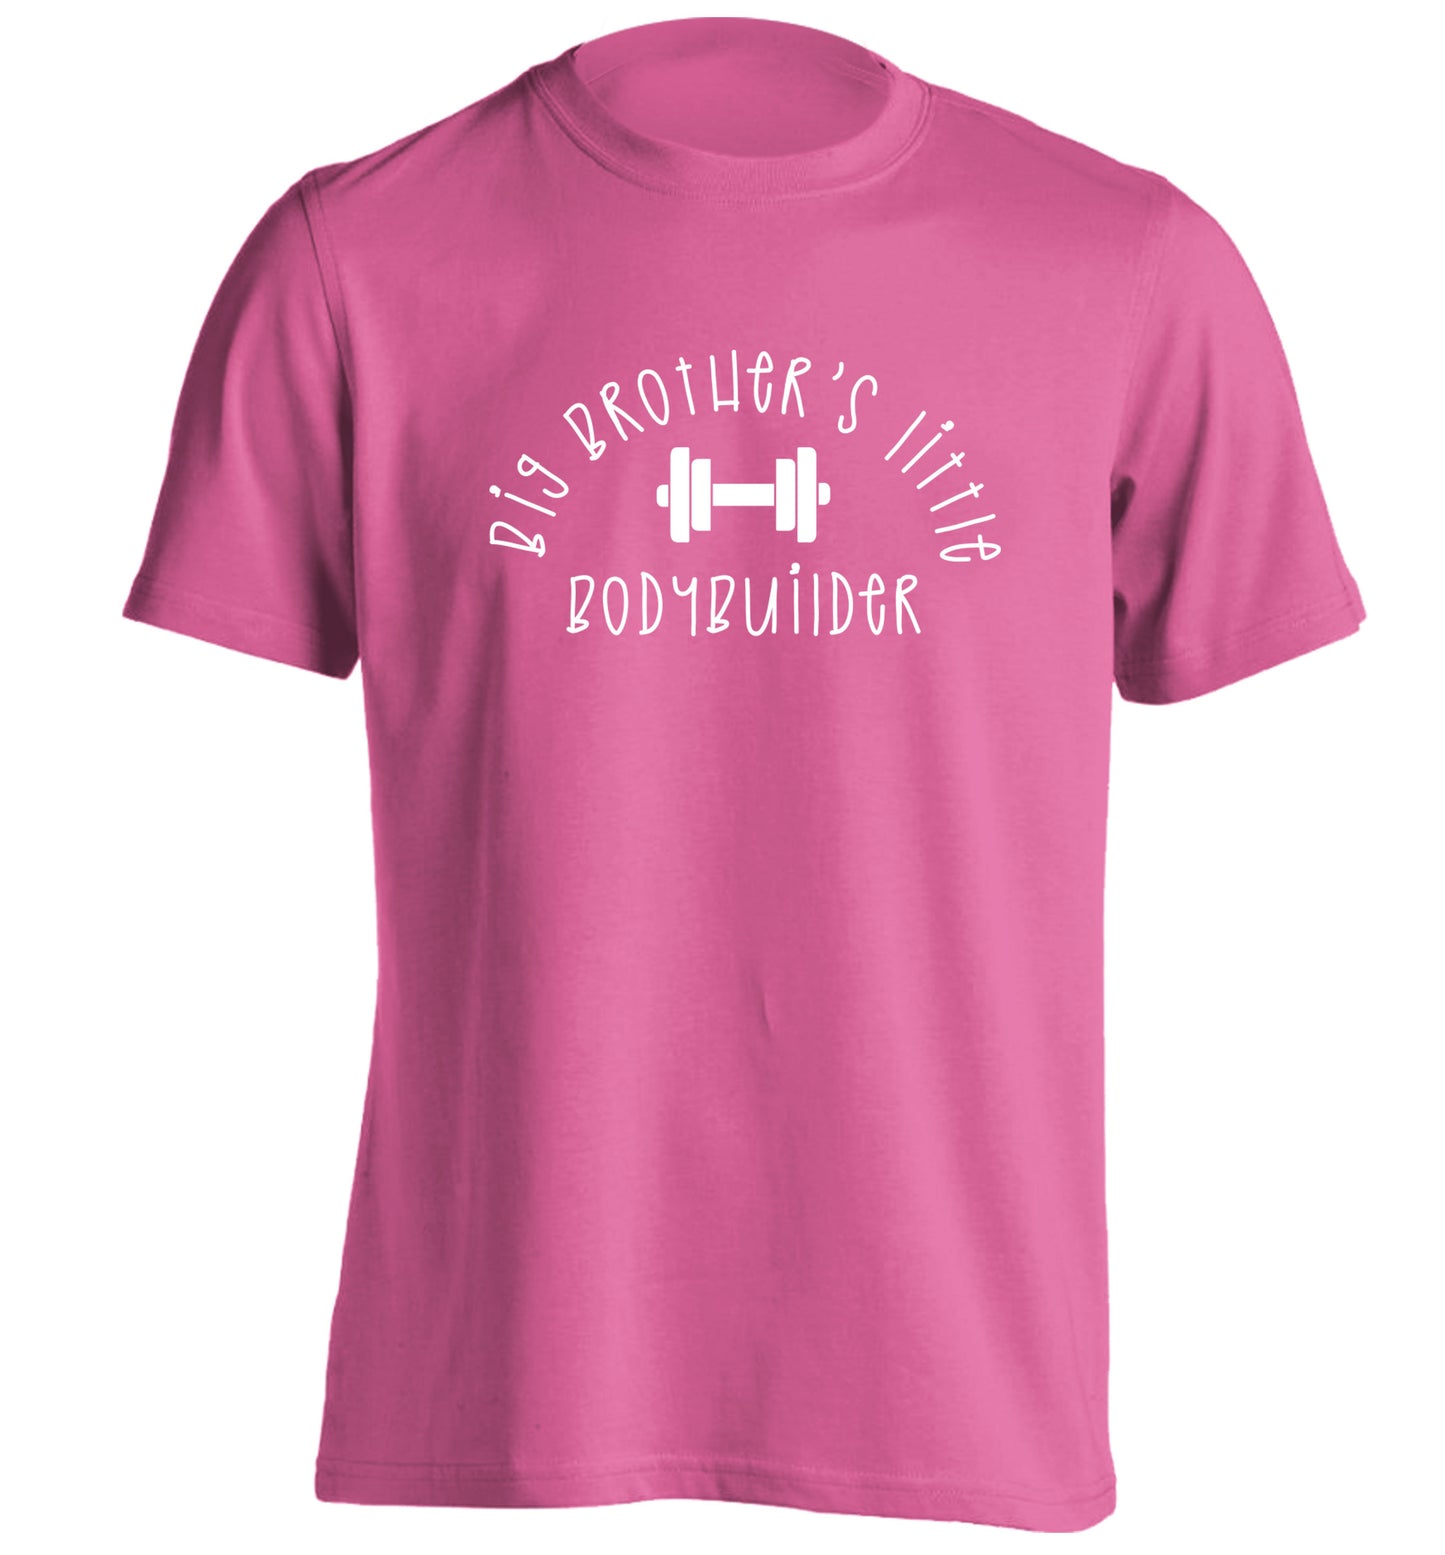 Big brother's little bodybuilder adults unisex pink Tshirt 2XL